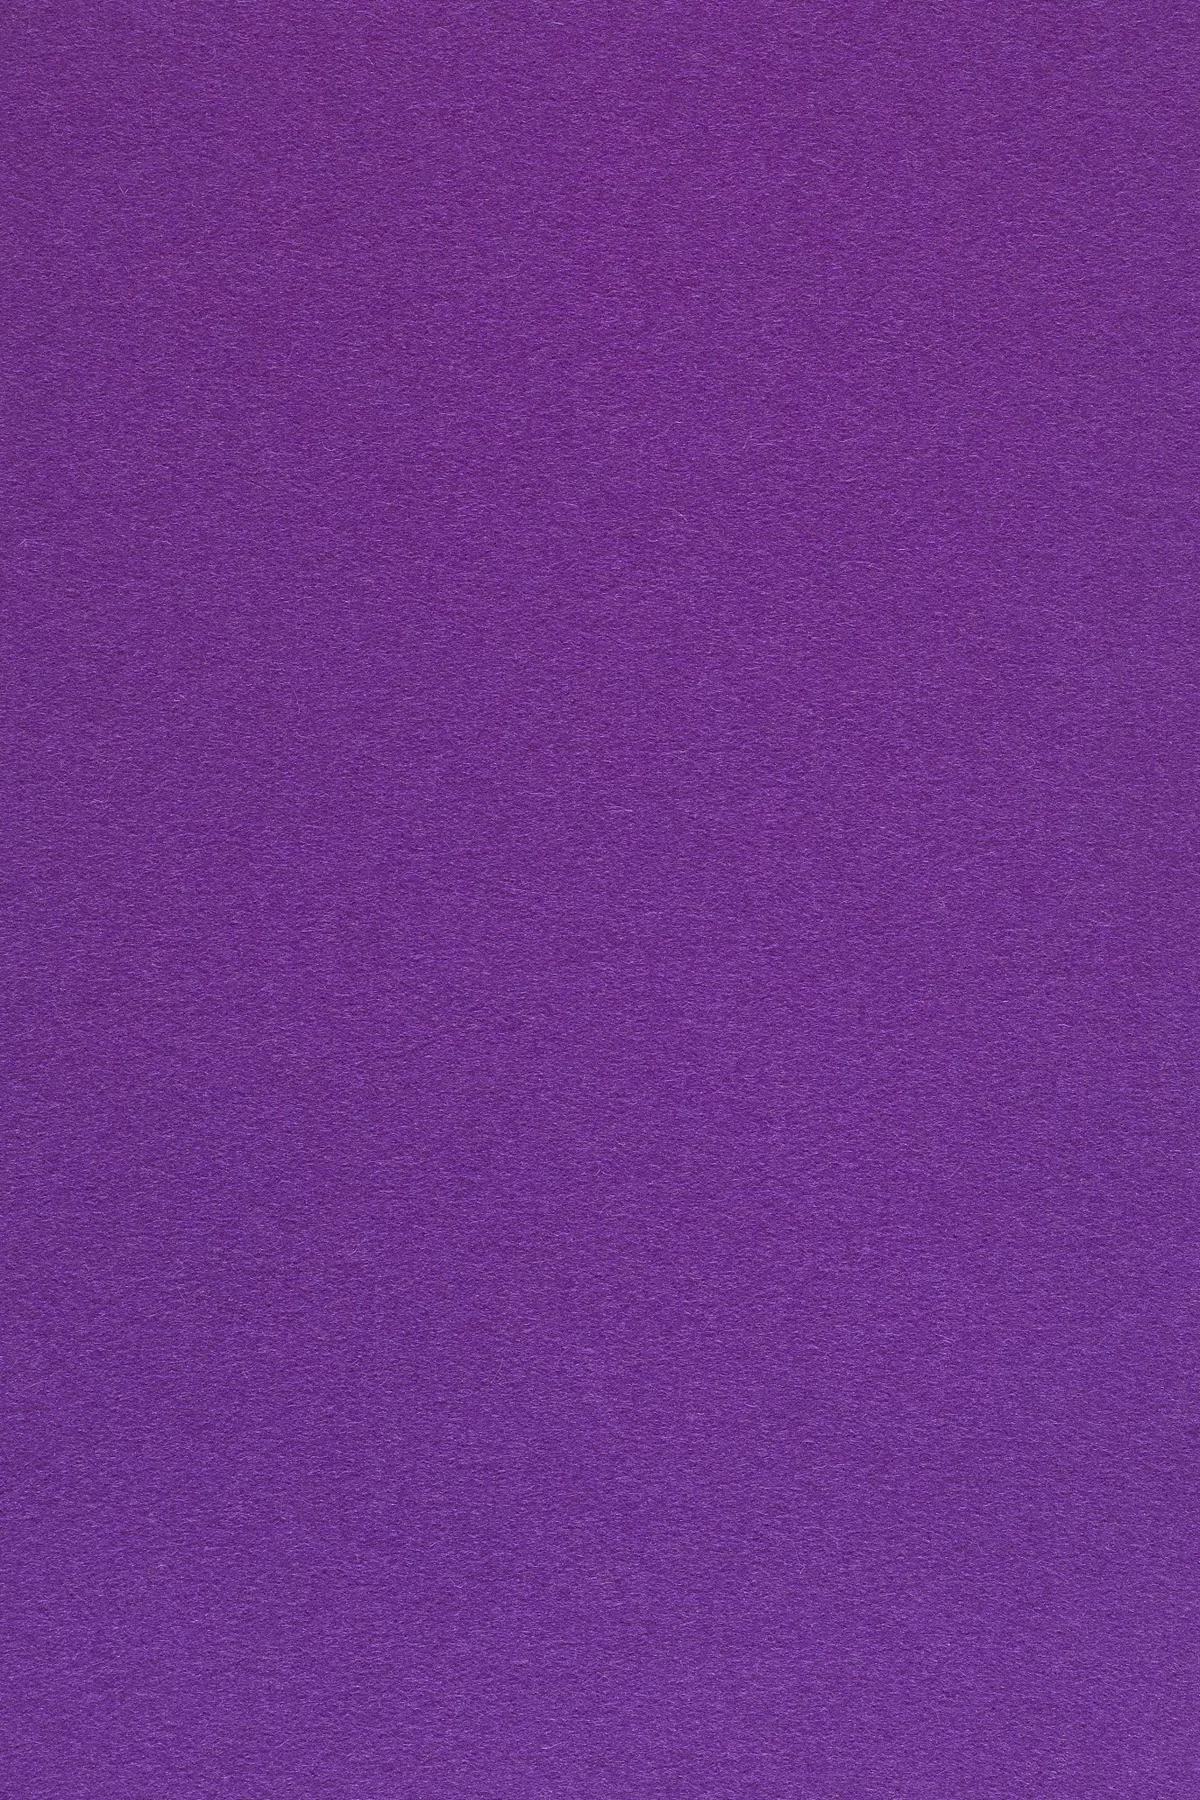 Fabric sample Divina 3 666 purple